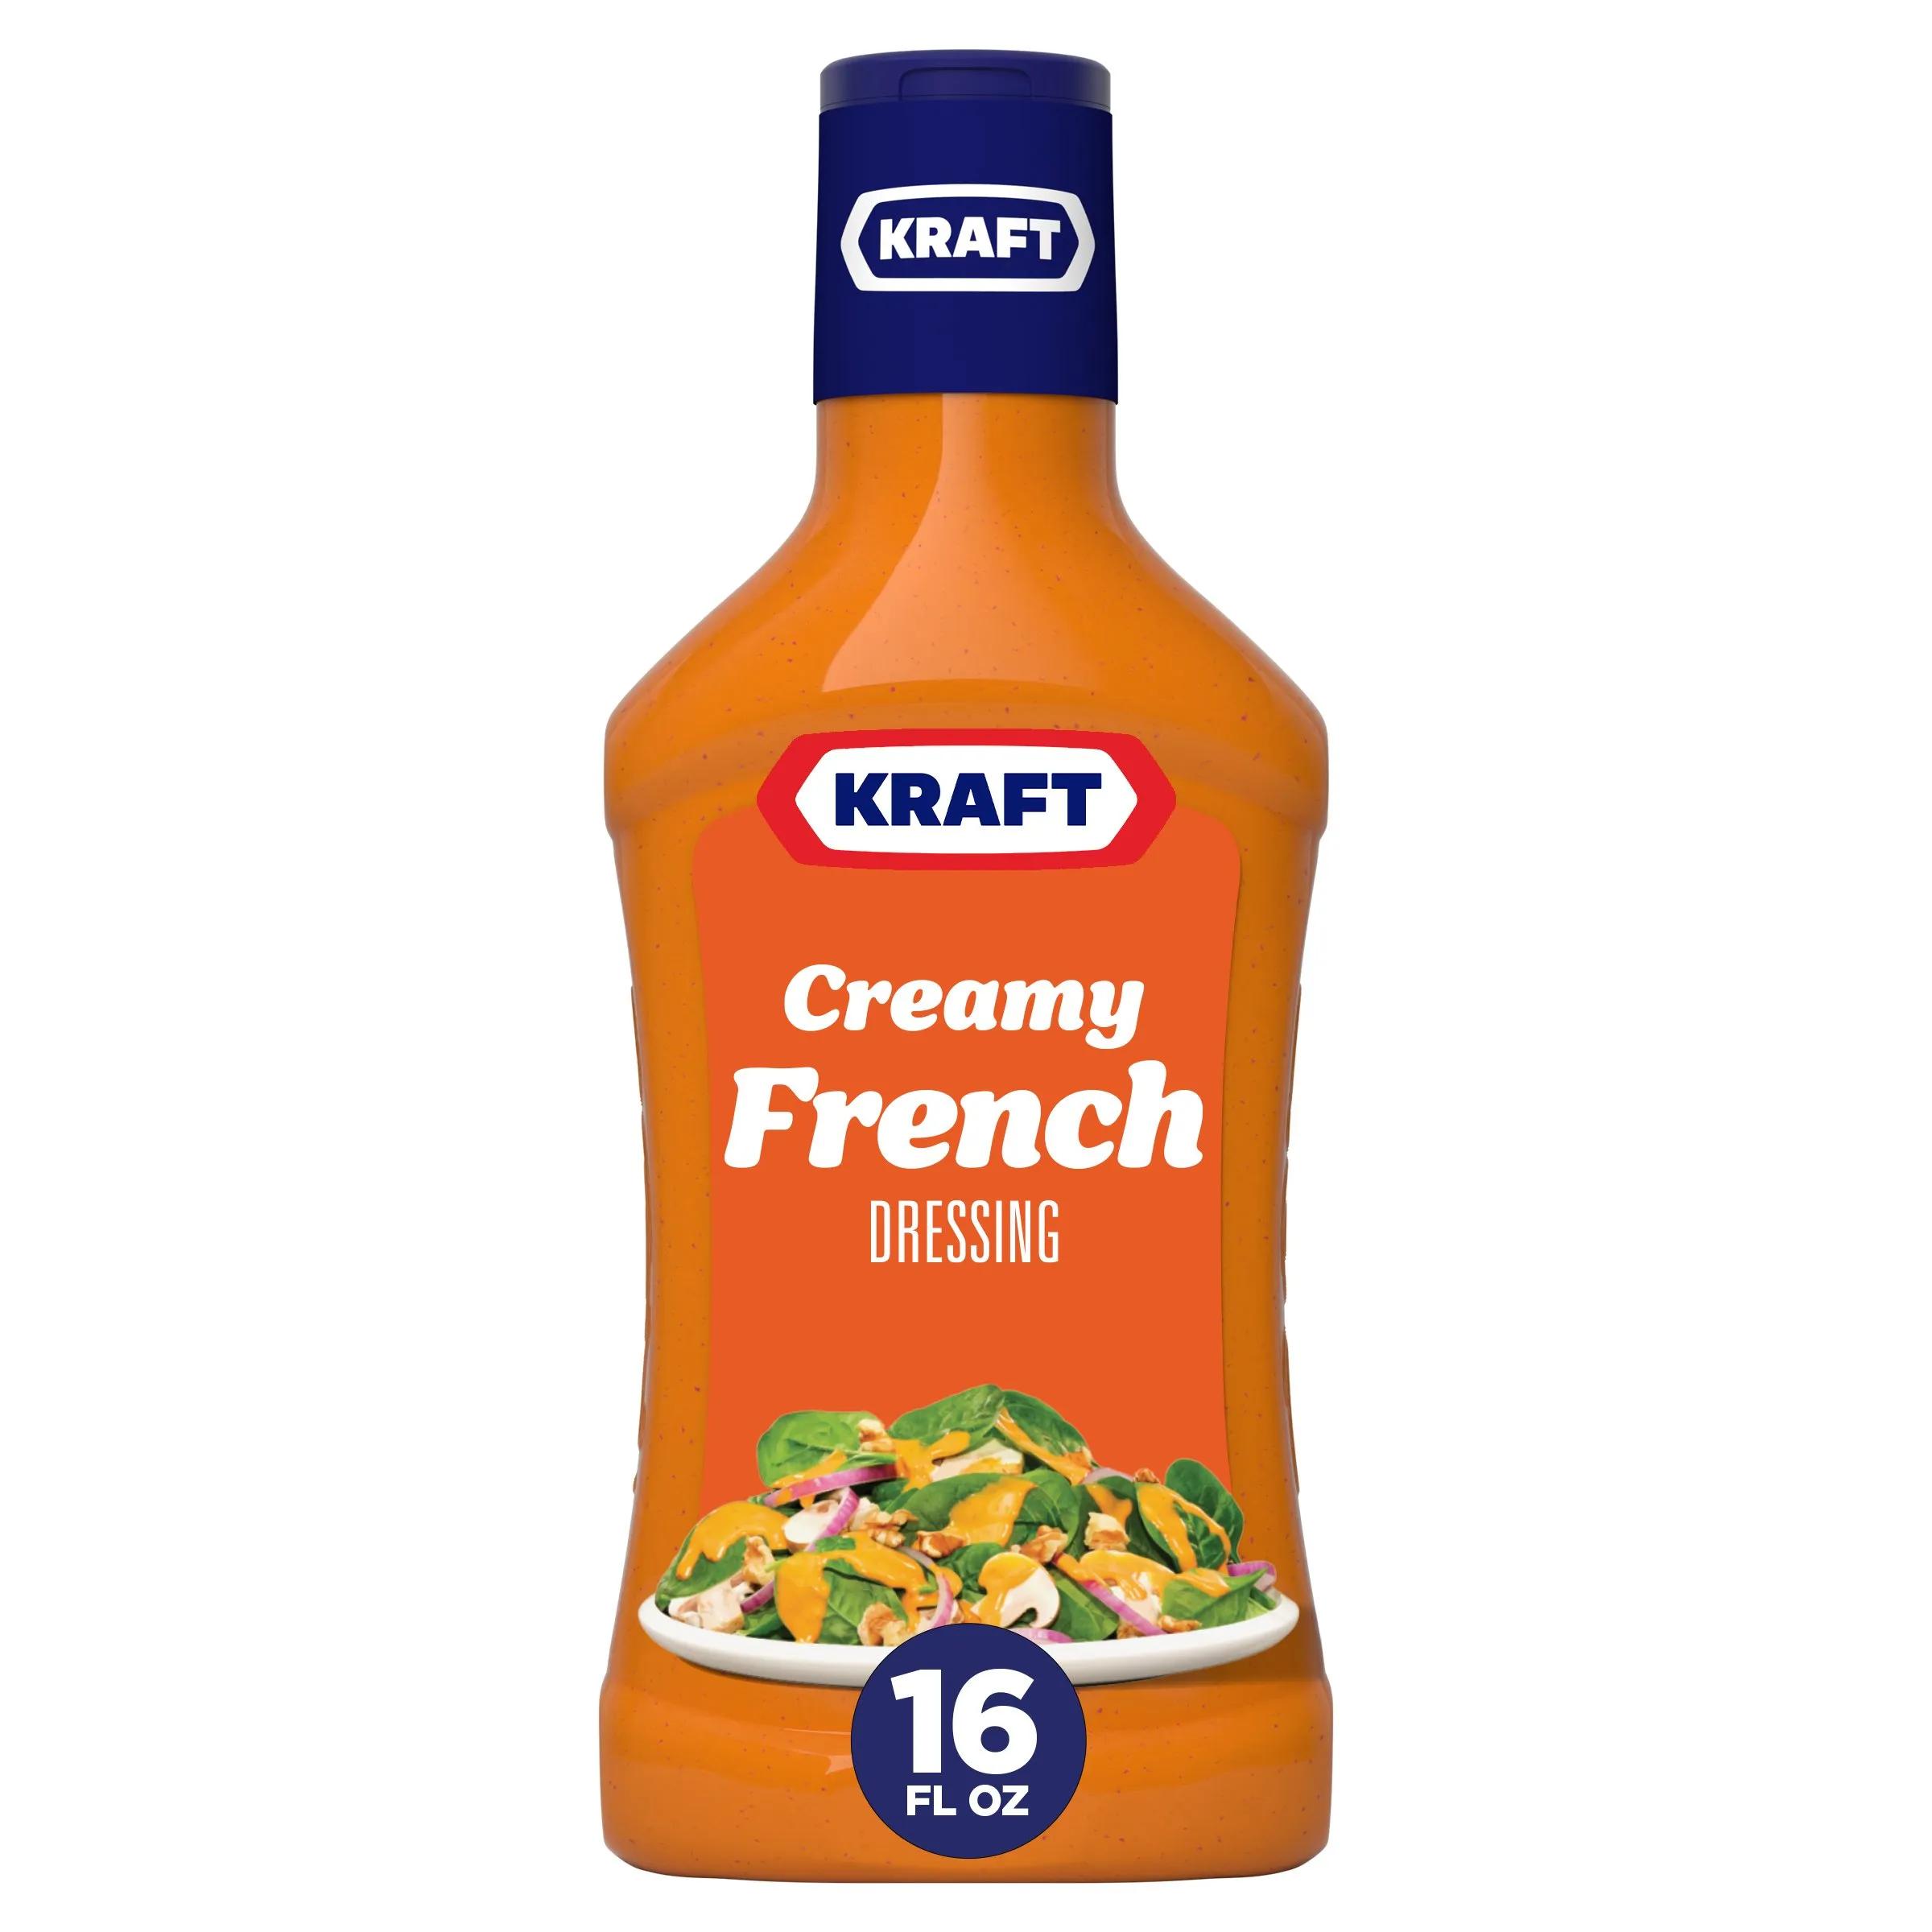 Kraft Creamy French Dressing - Shop Salad Dressings at H-E-B